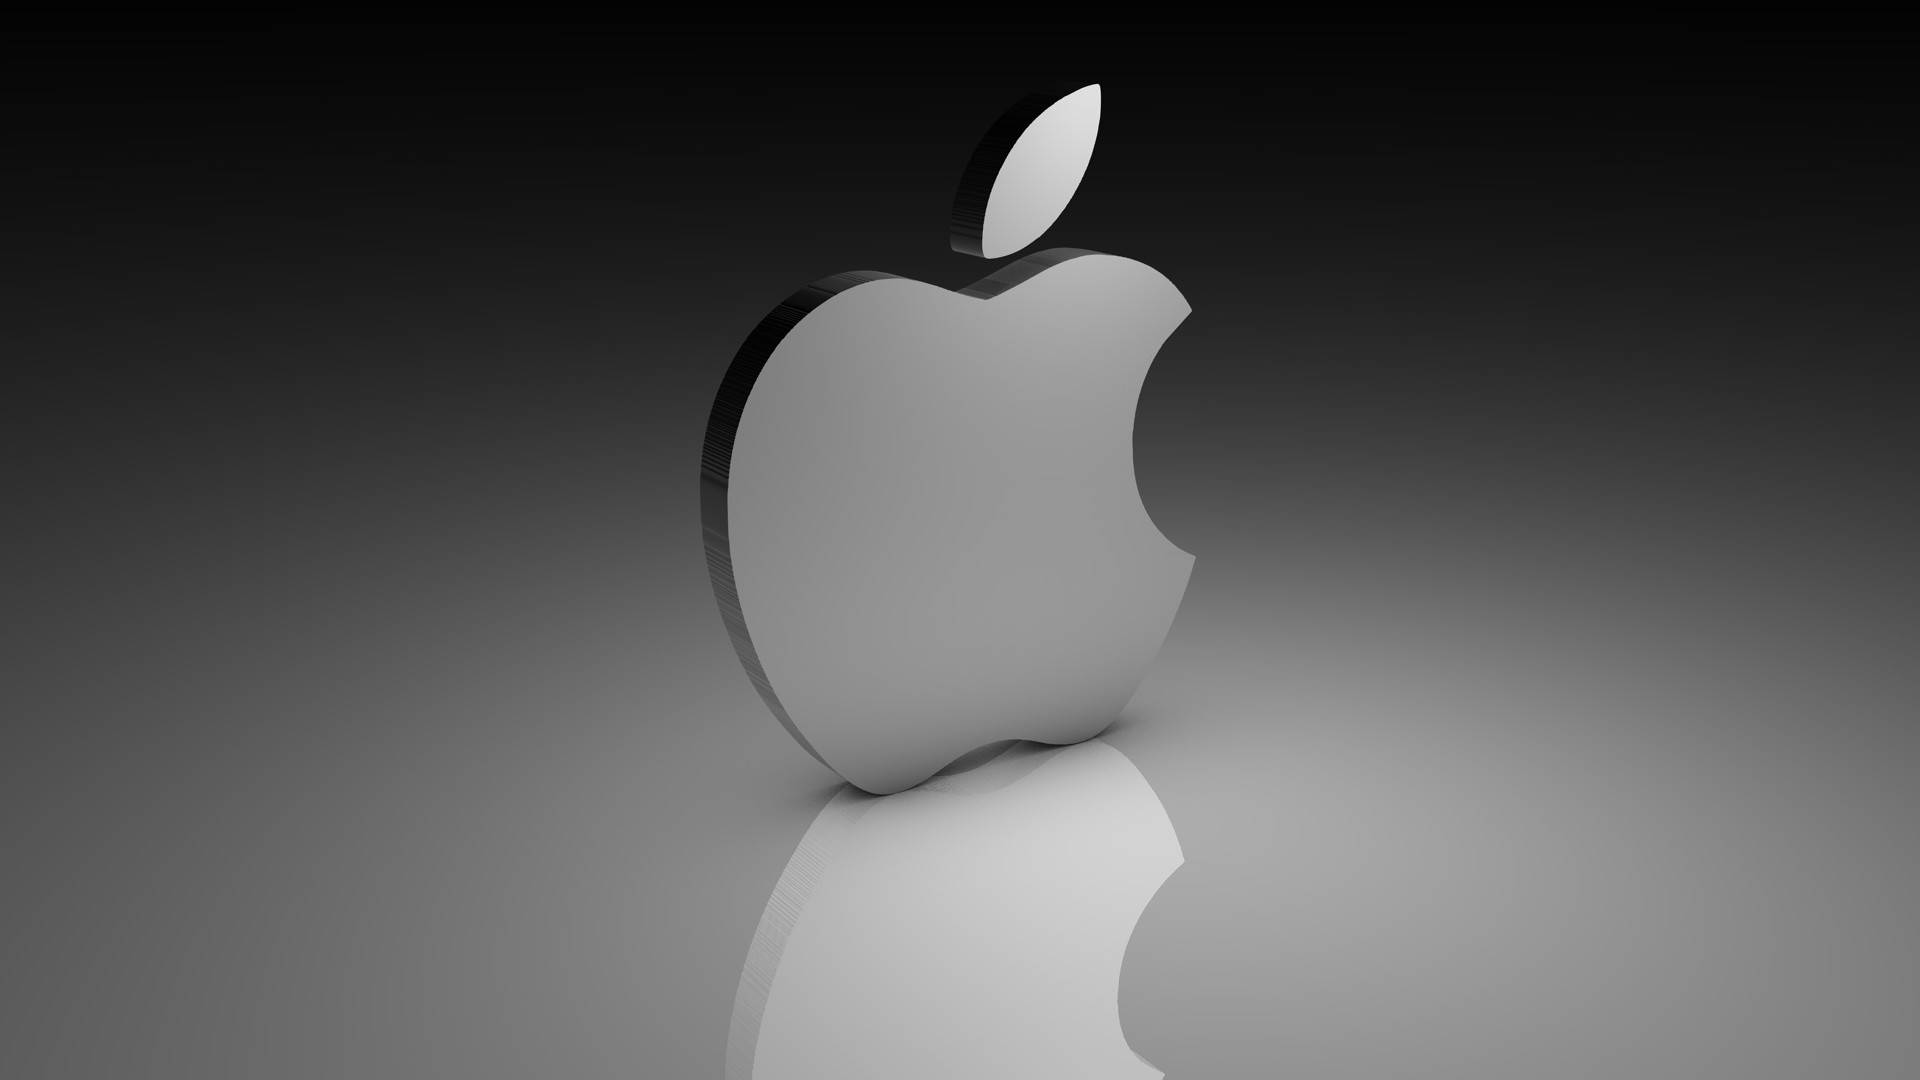 Gray Apple Logo Mac Os Wallpaper